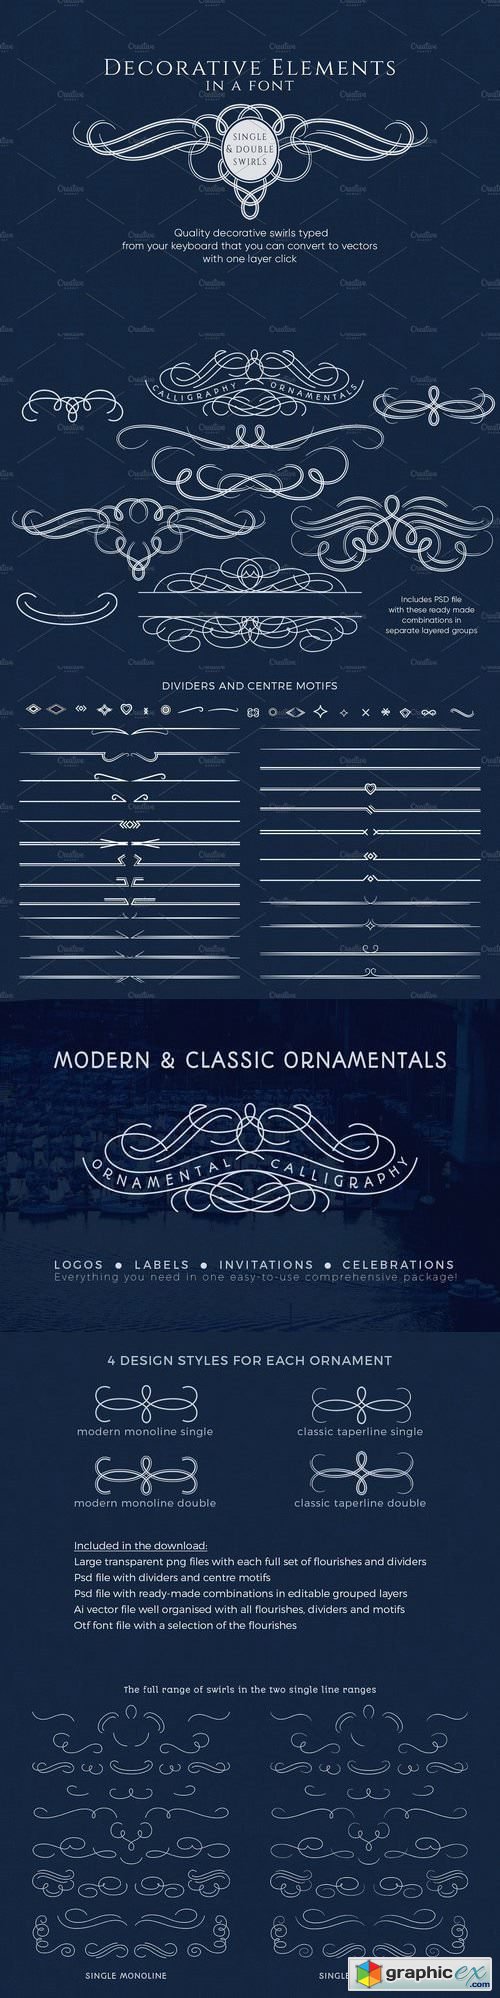 Modern & Classic Ornament Styles